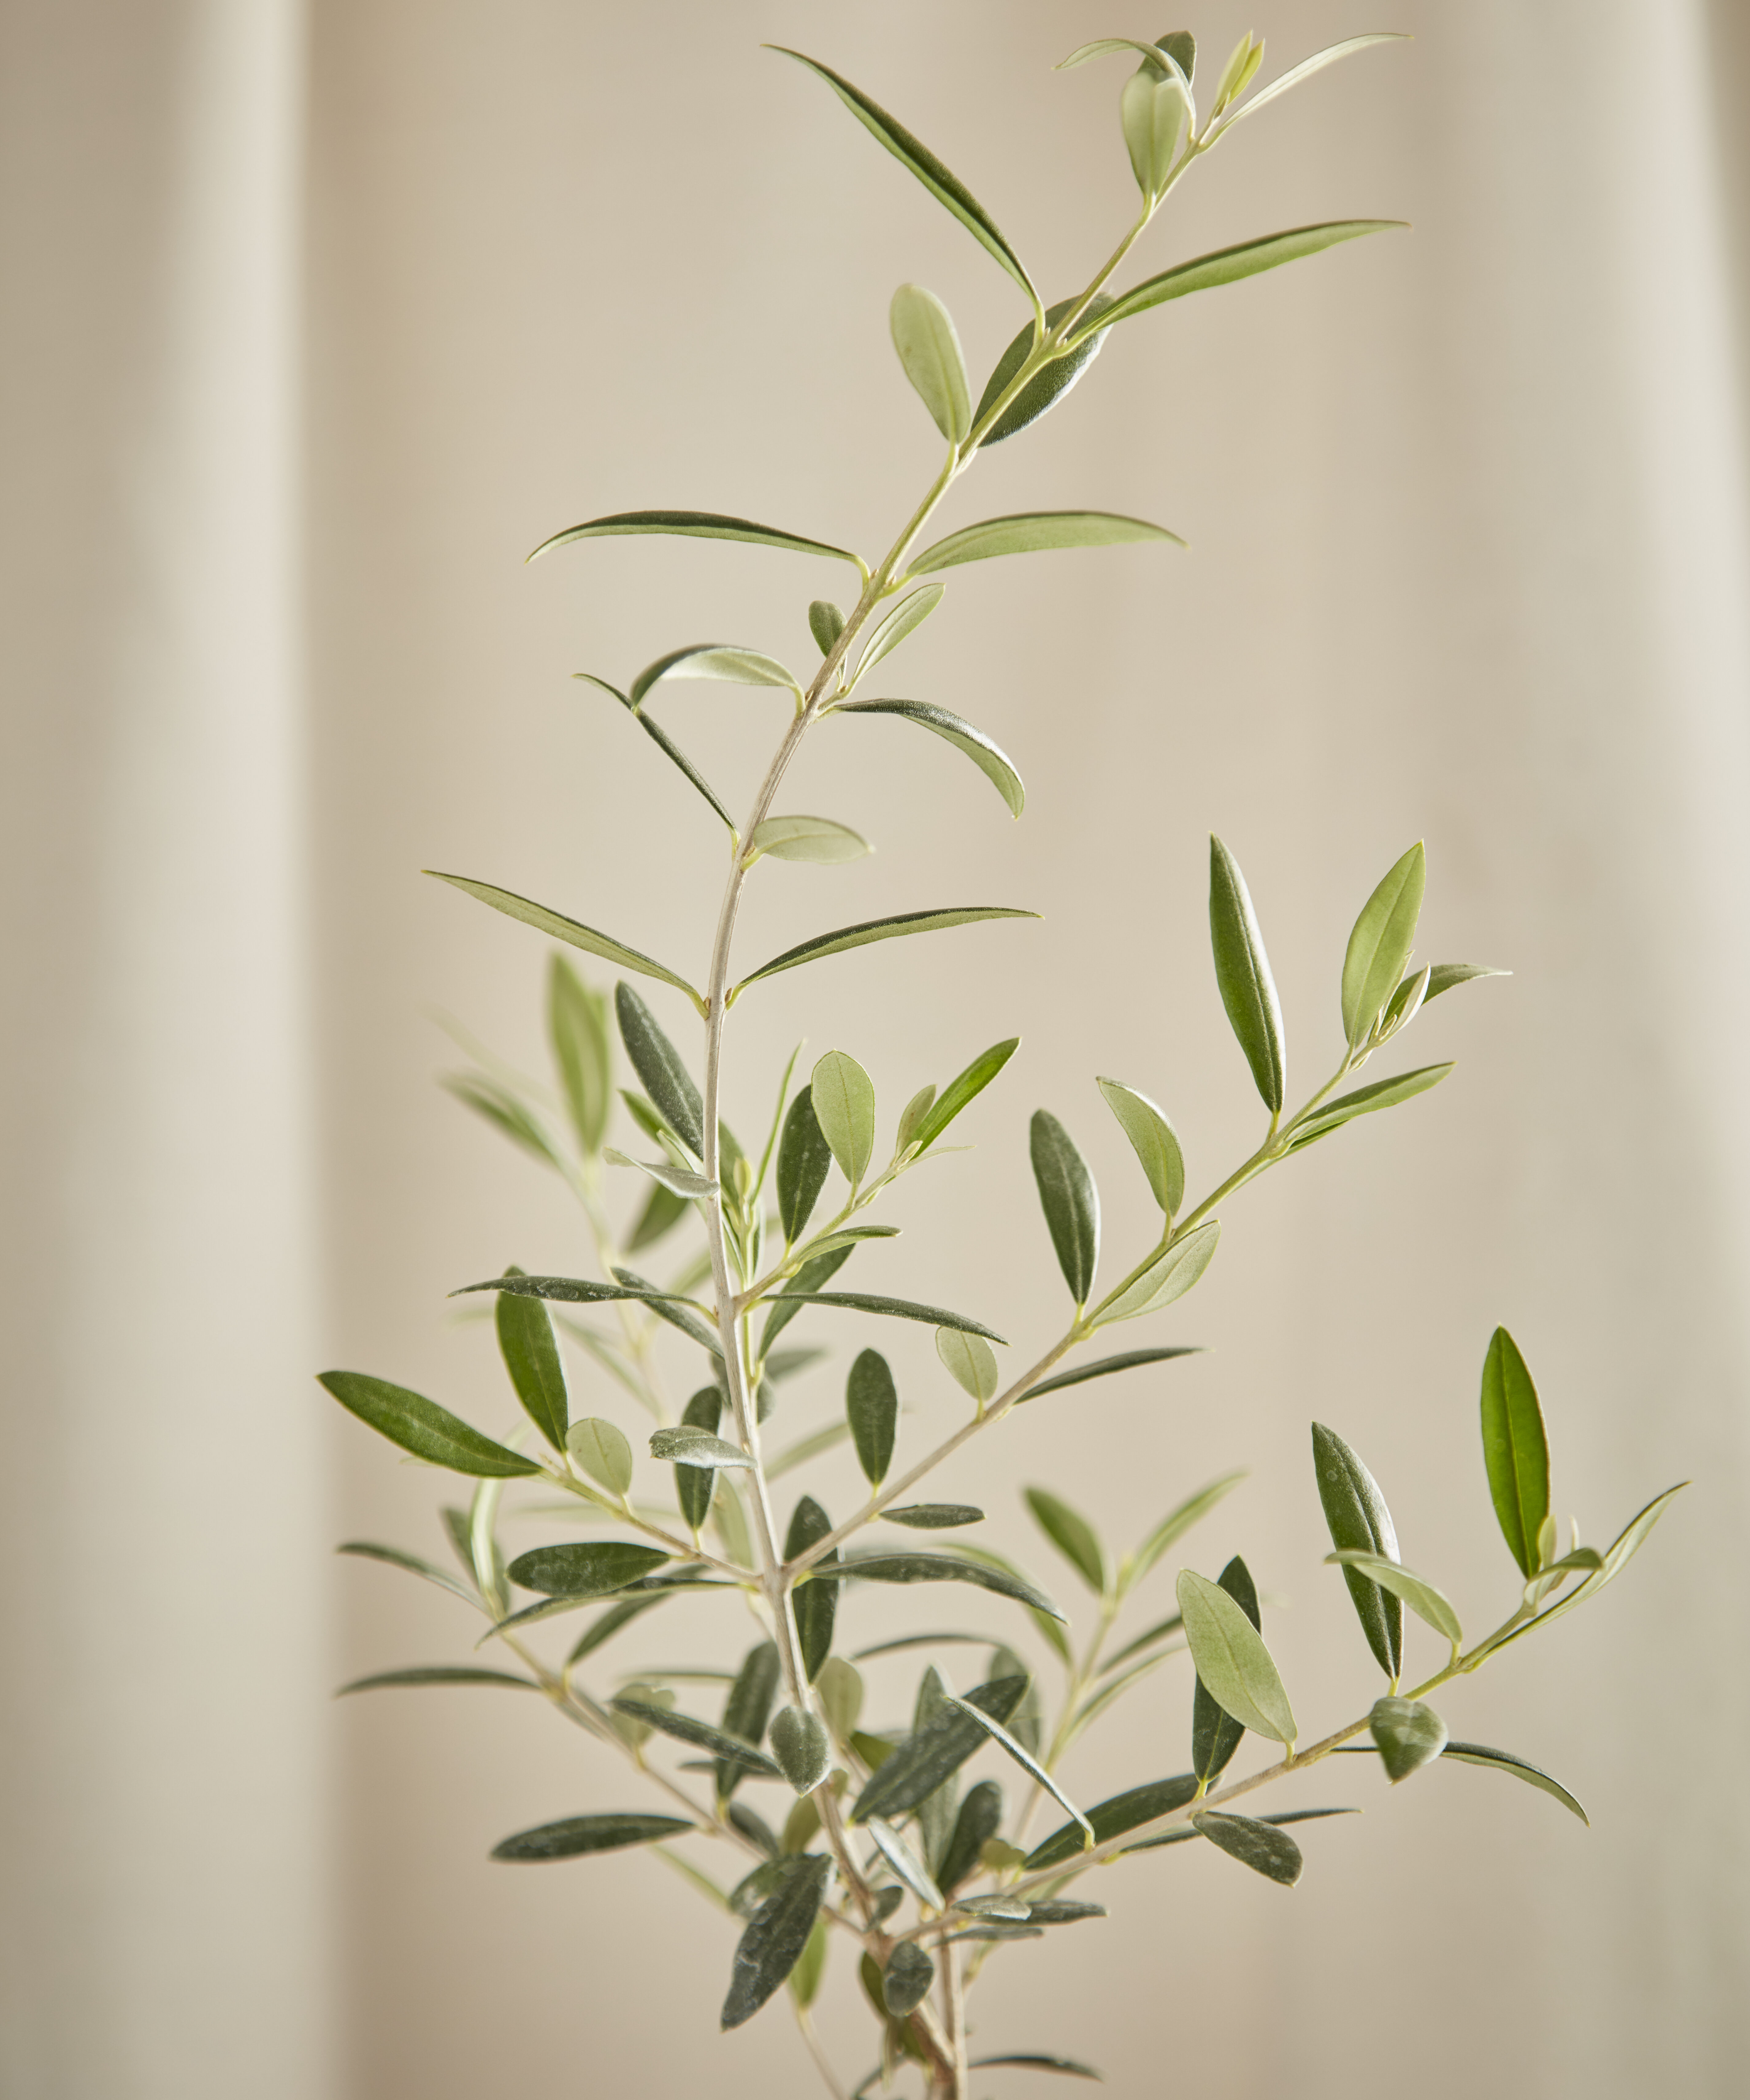 Olive Tree Care